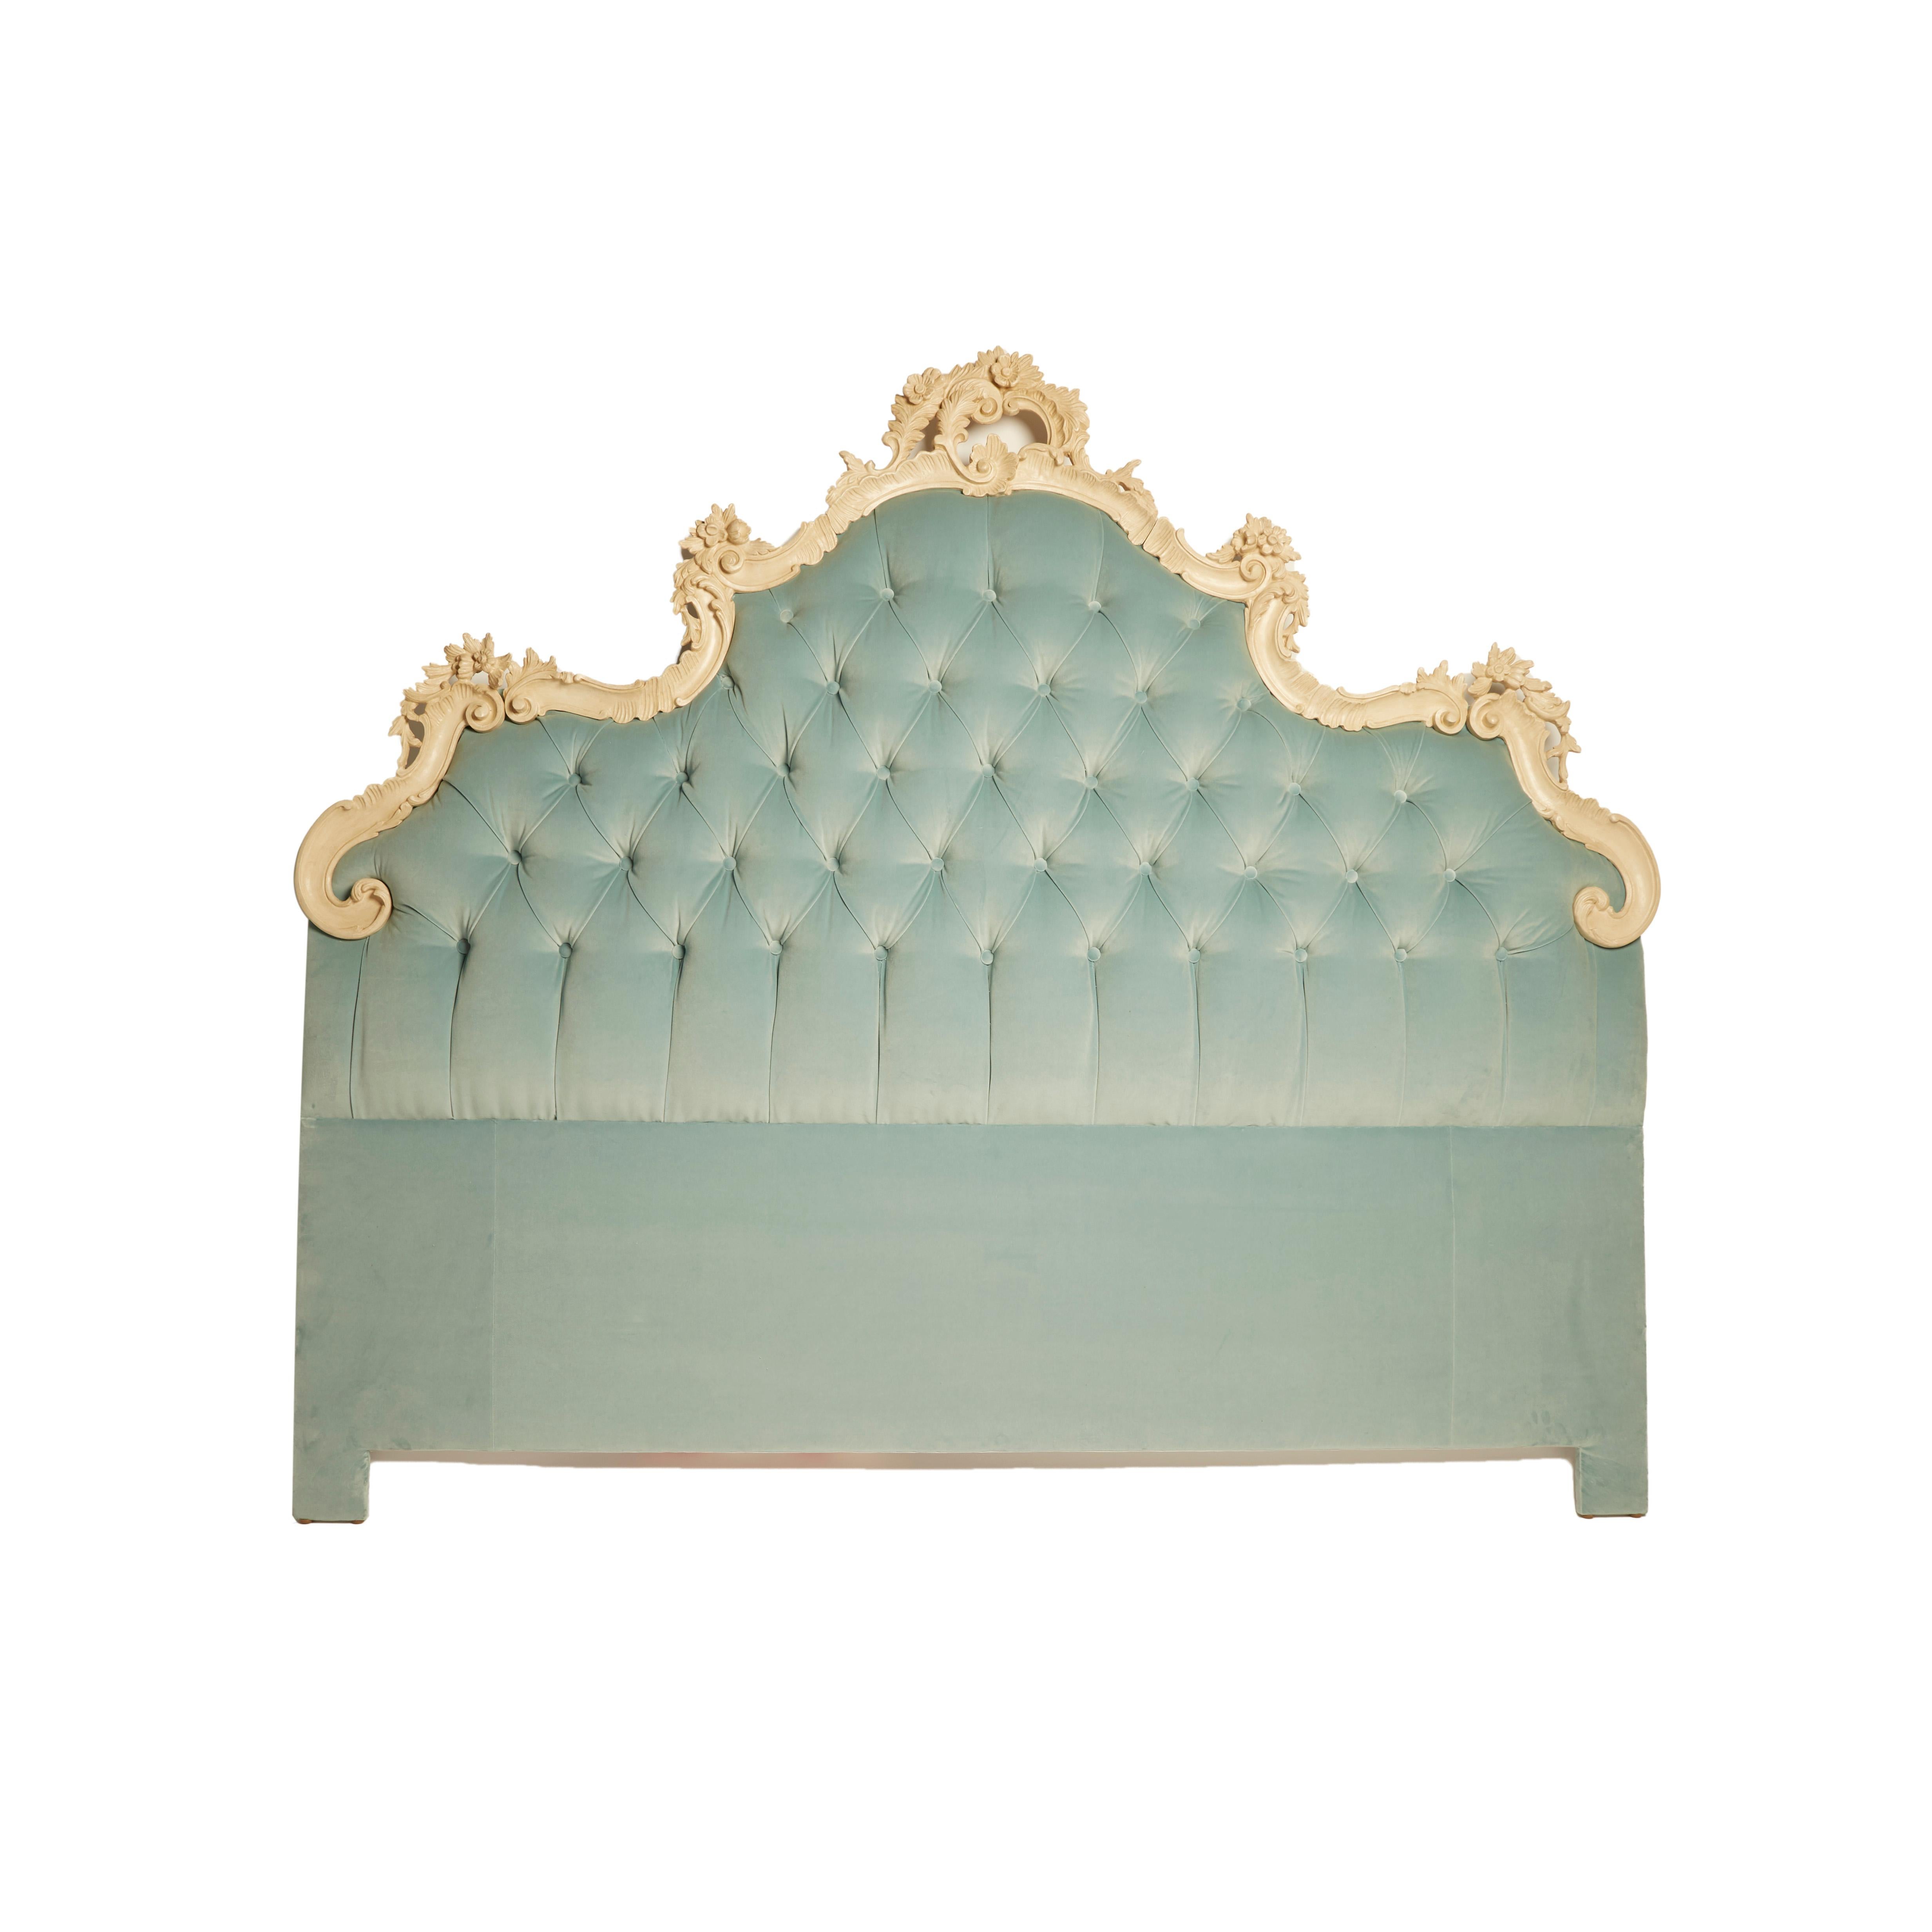 Midcentury Italian Hollywood Regency-style carved wood King-size Headboard. Newly re-upholstered in aqua velvet.